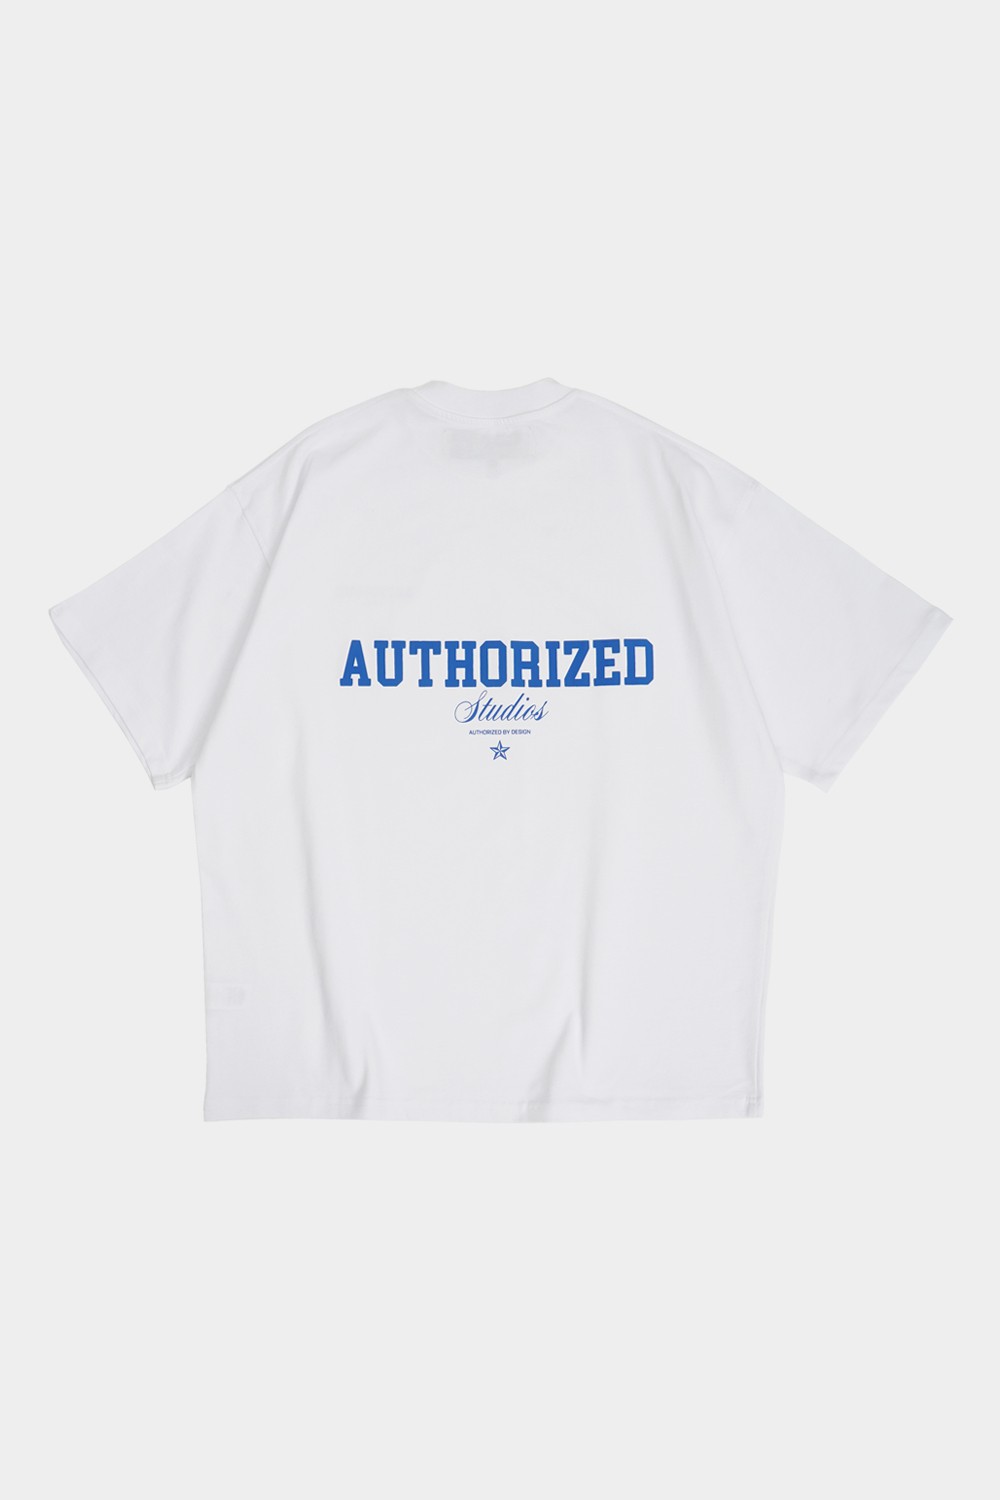 Authorized Studio Graphic T-Shirt (ATH-1)